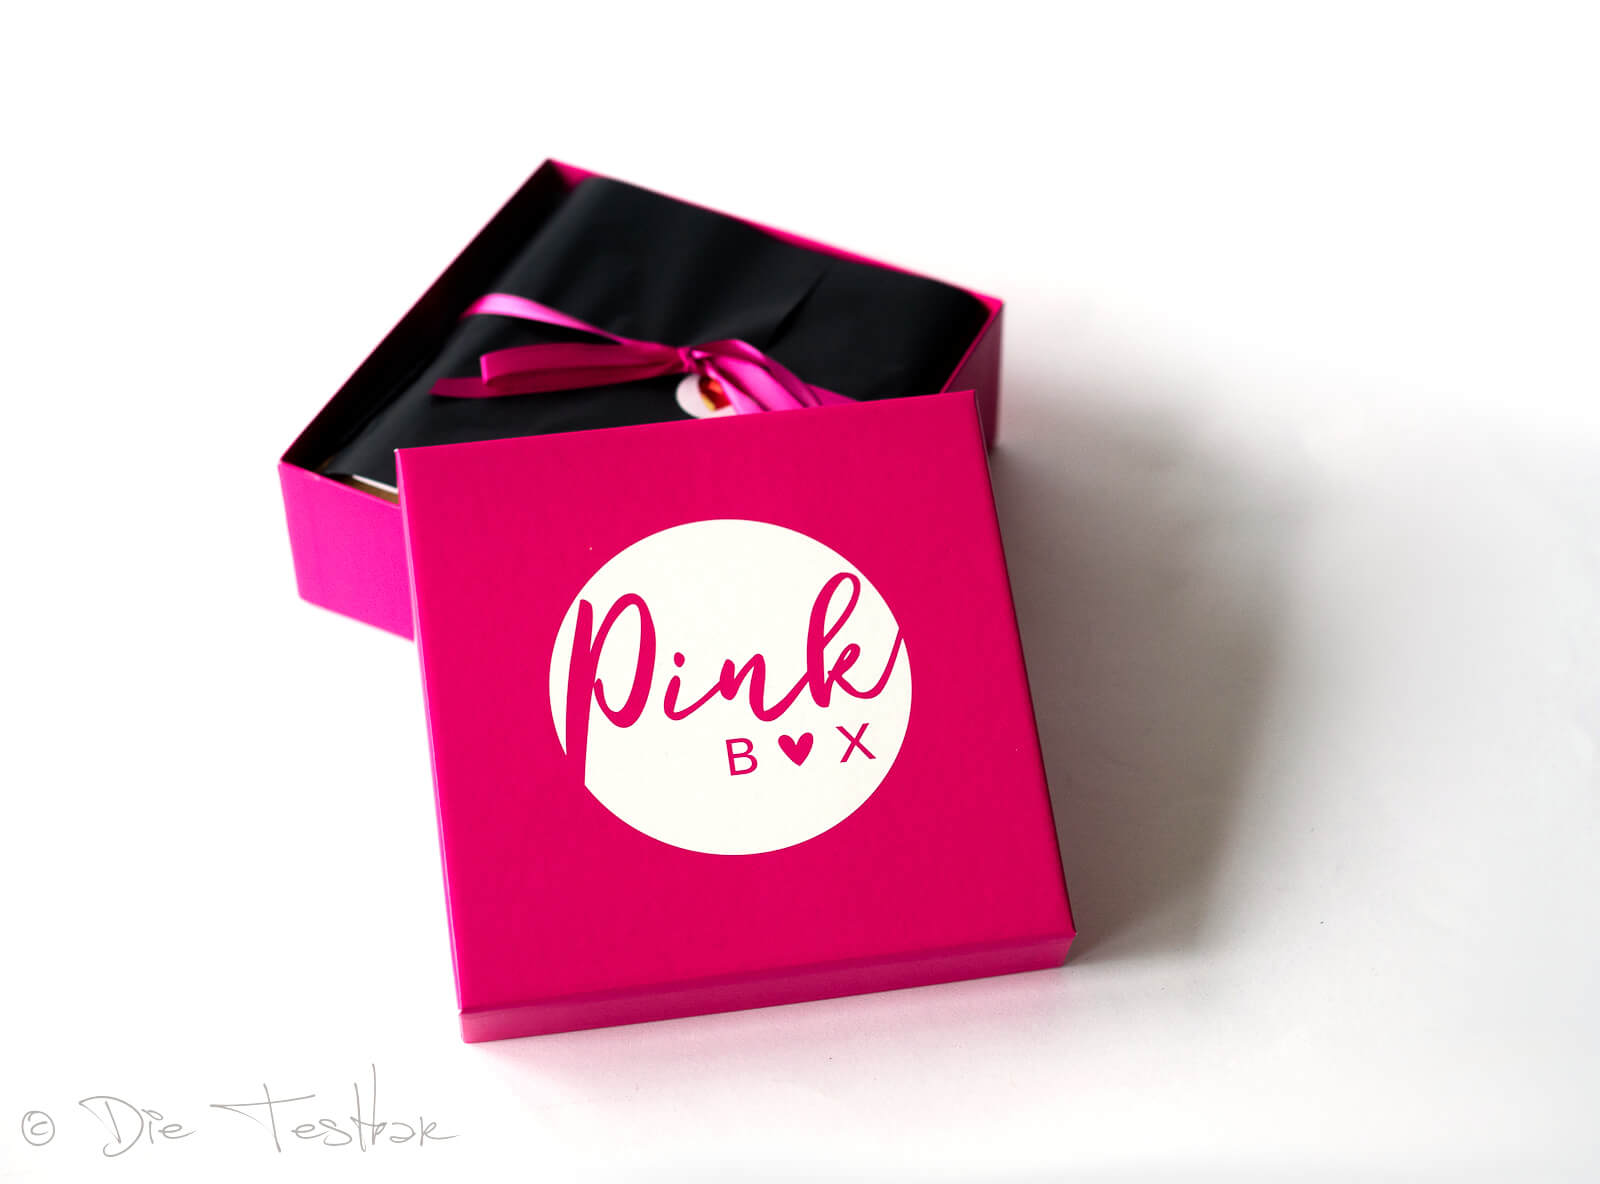 DIE PINK BOX im Januar 2021 – Pink Box Ready, Set, Go! 2021